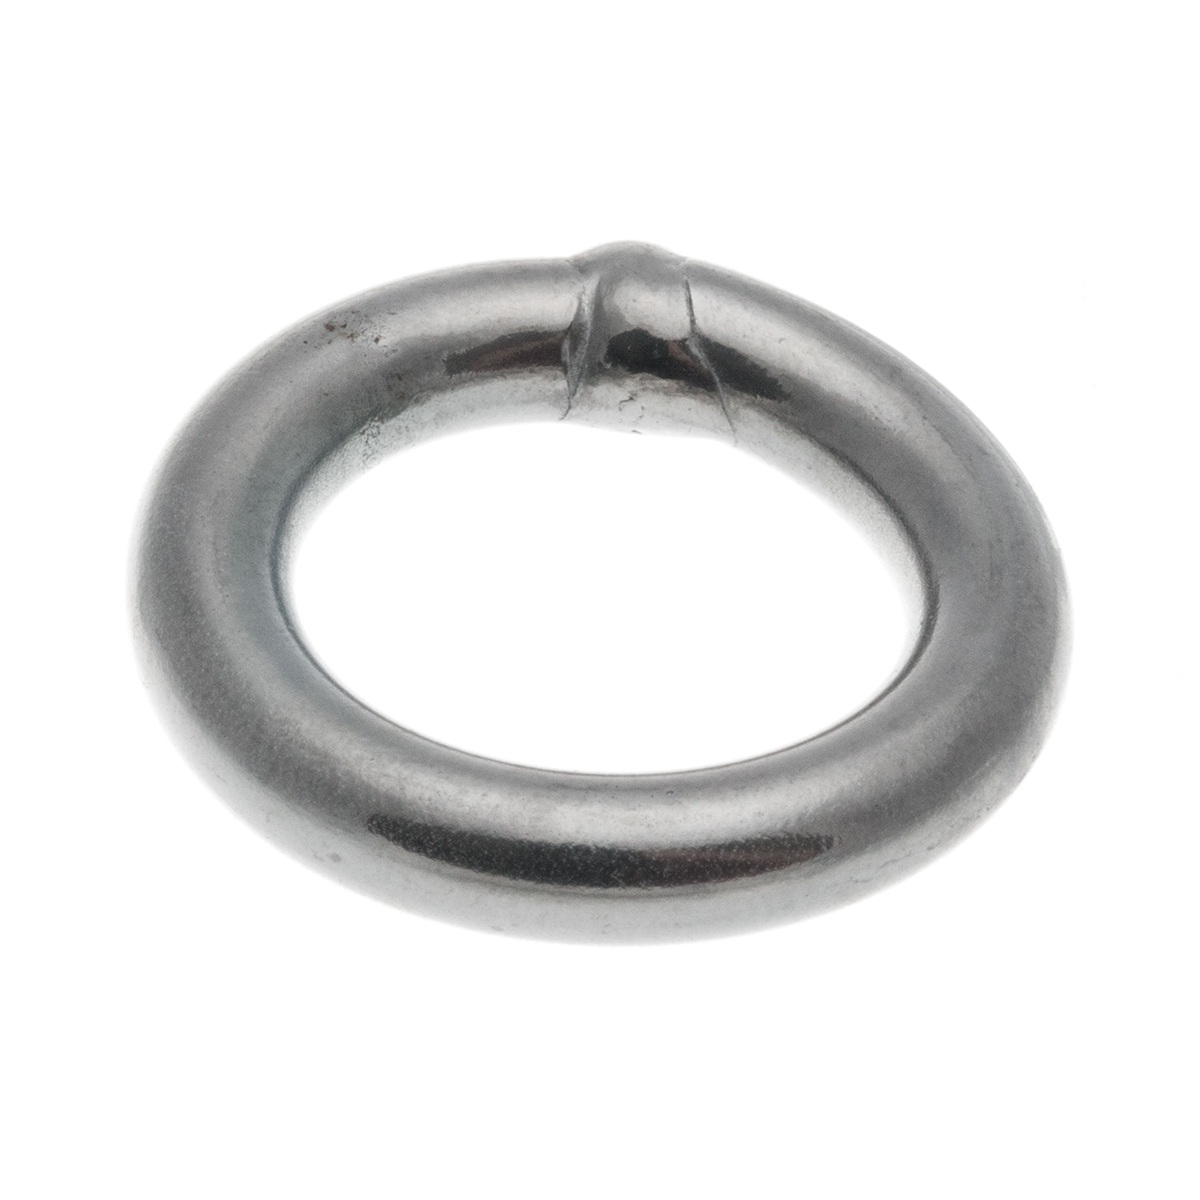 Devam Round 6g 14 KT White Gold Diamond Ring, Size: 17 mm at Rs 16000 in  Surat